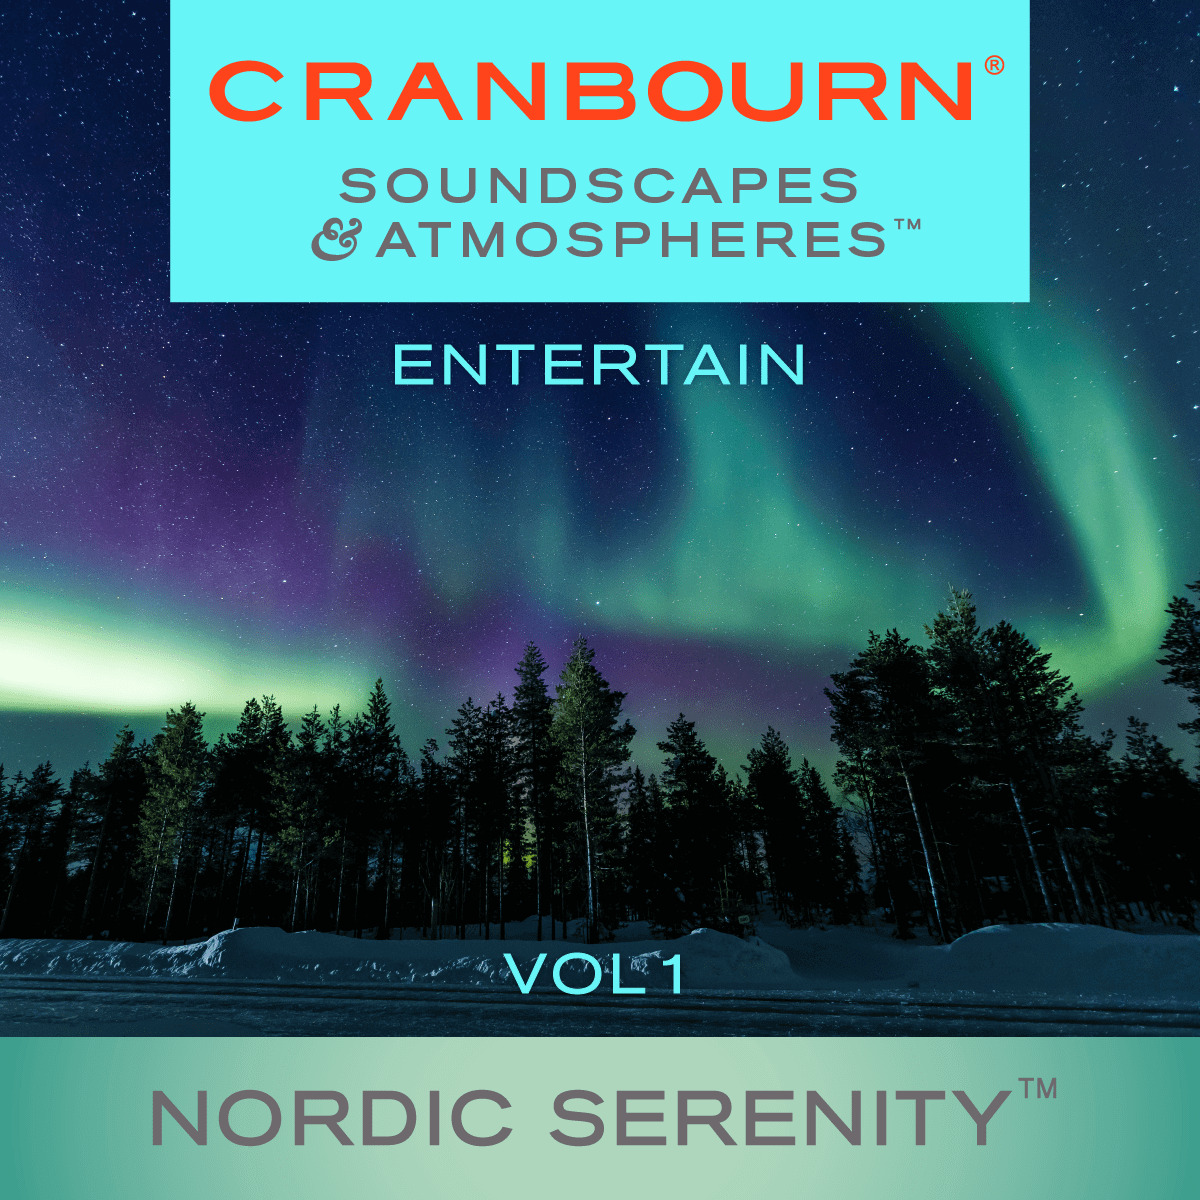 Nordic Serenity™